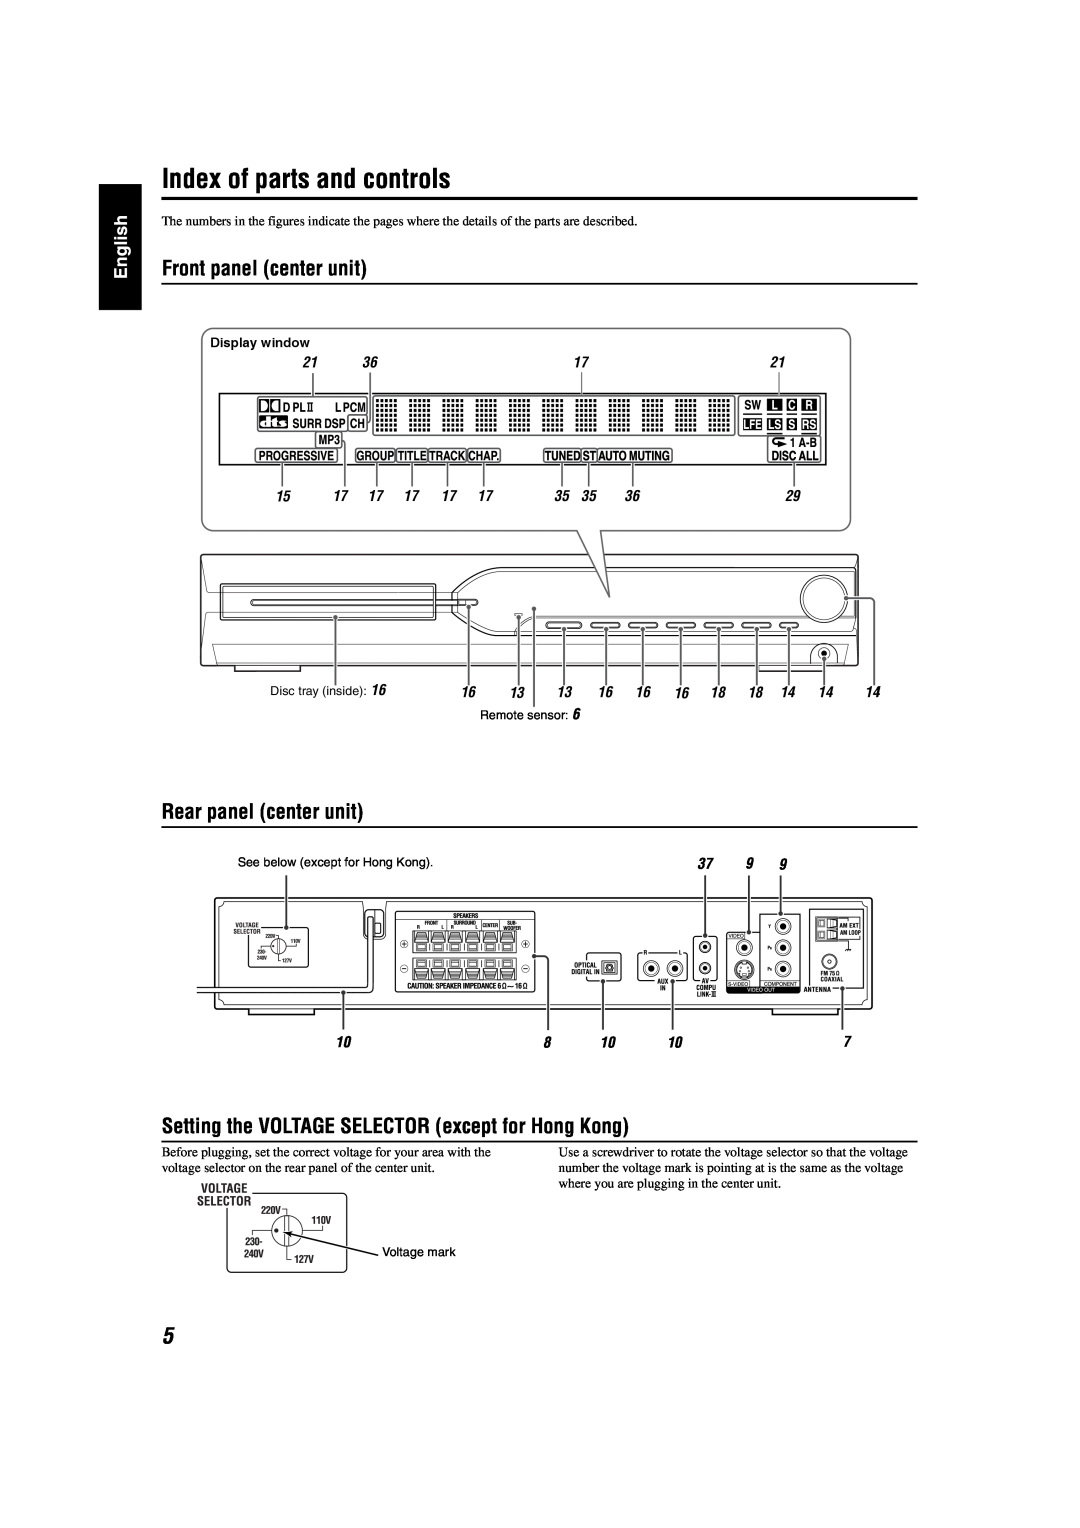 JVC GVT0141-003A manual Index of parts and controls, Front panel center unit, Rear panel center unit 